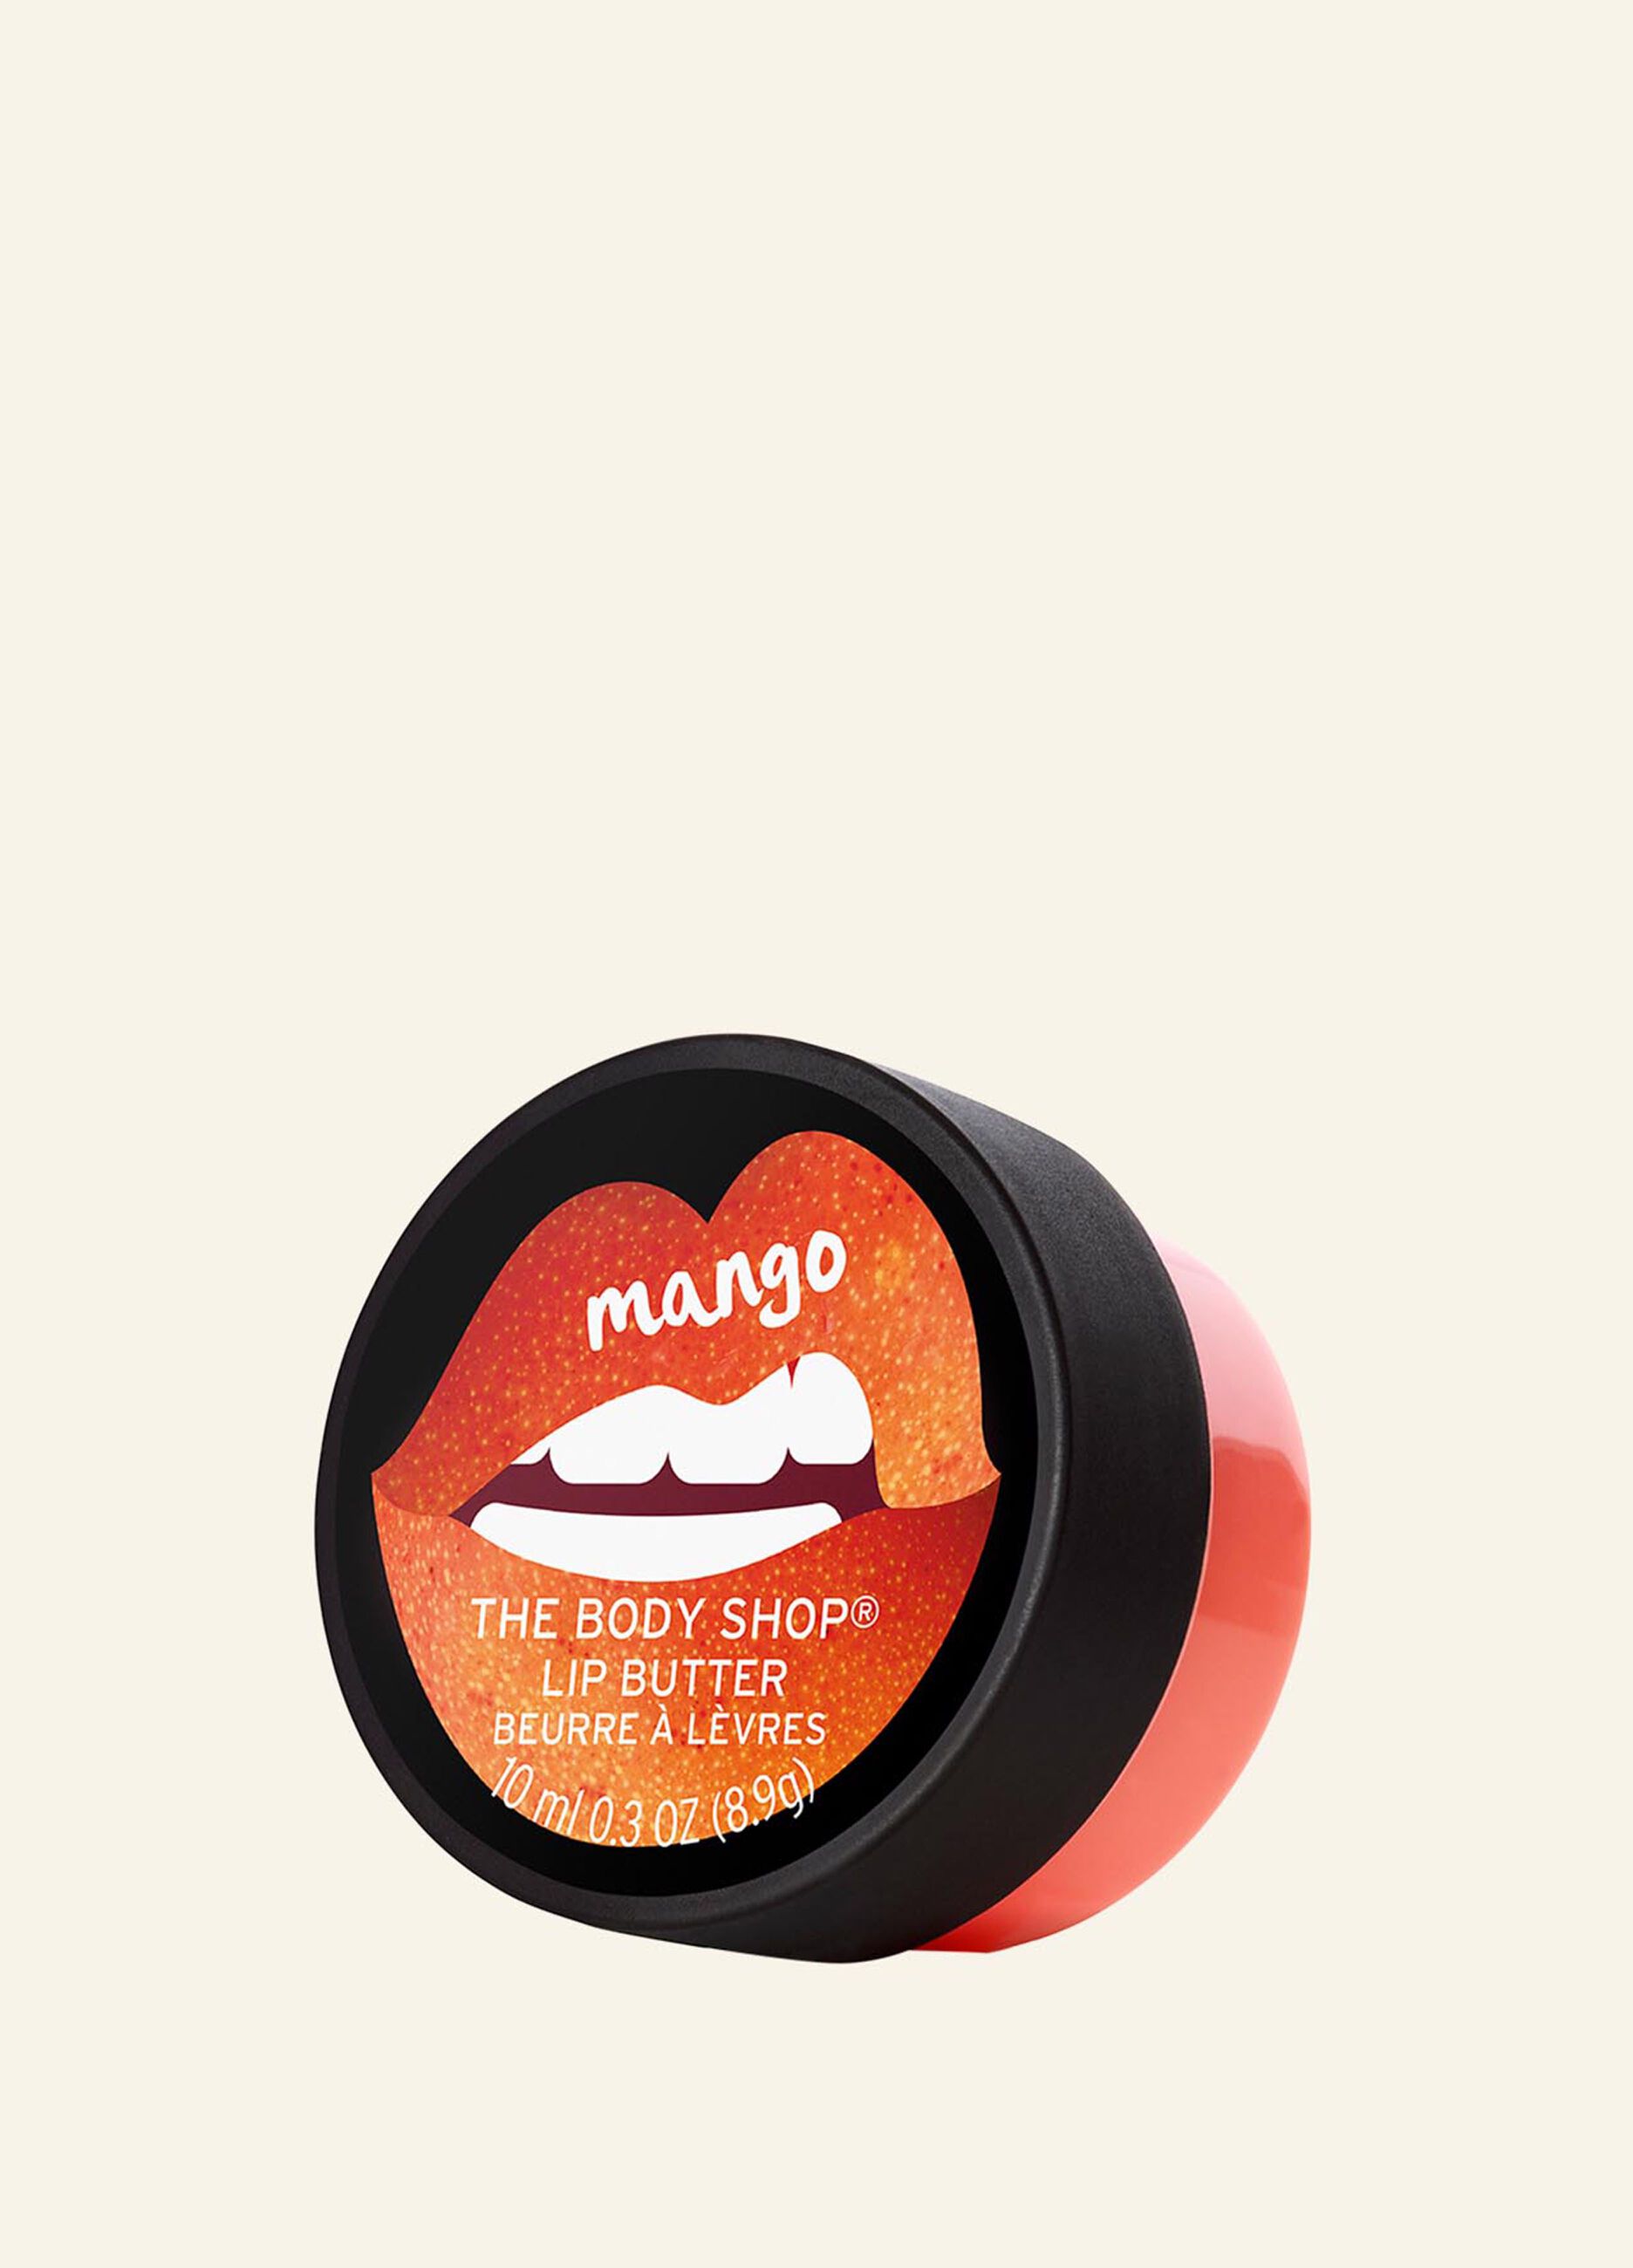 The Body Shop mango lip balm